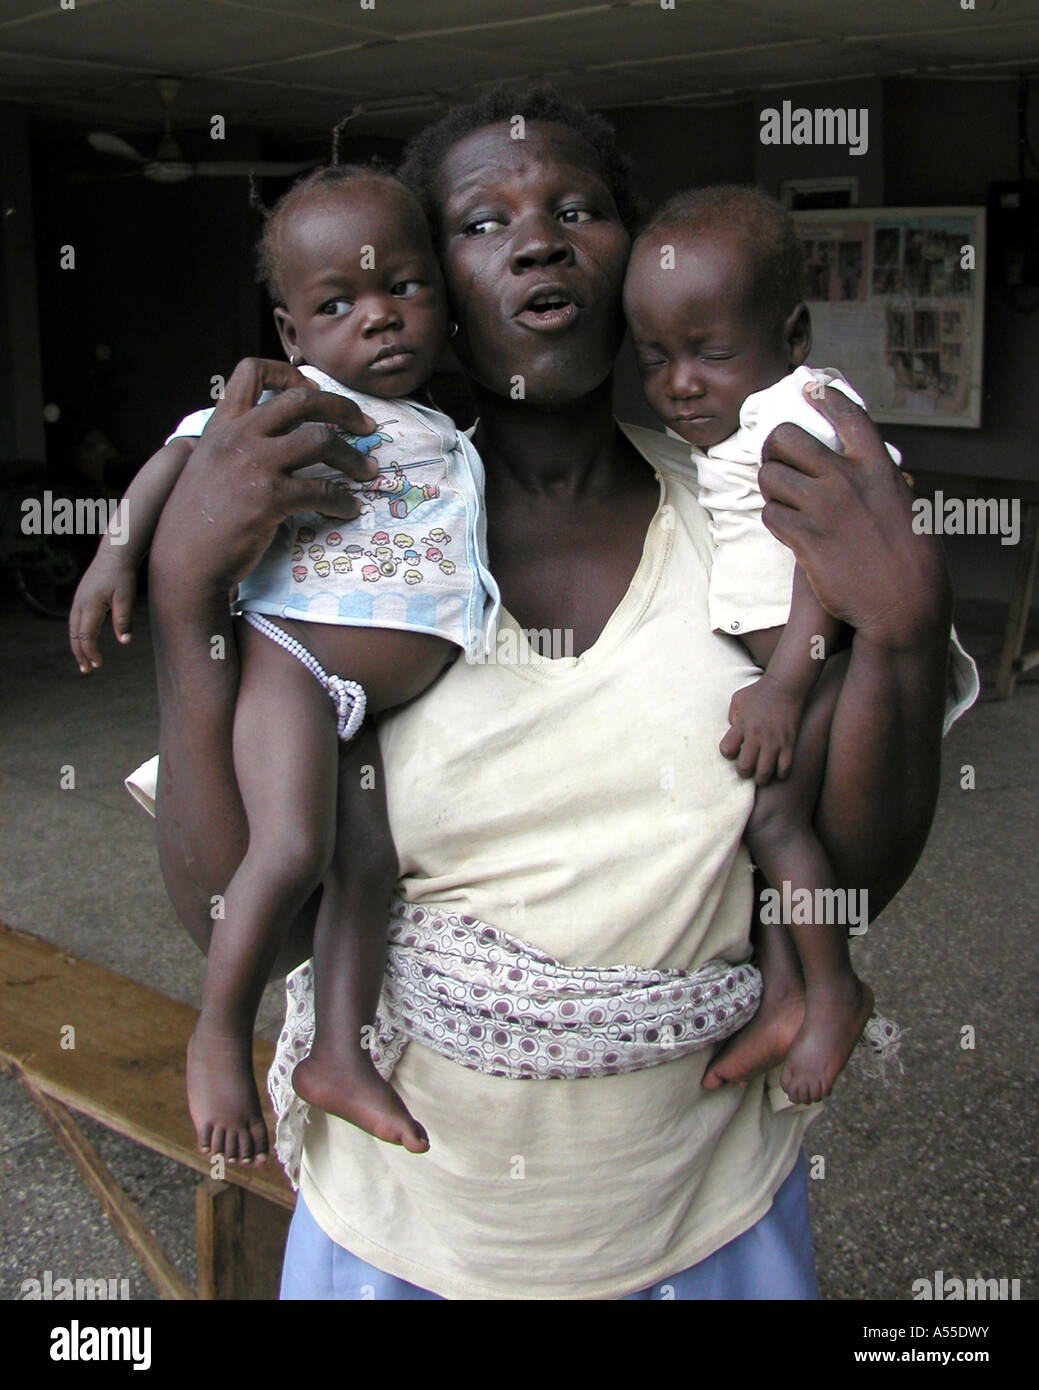 Painet ik0338 ghana woman twins bolgatanga country developing nation less economically developed culture emerging market Stock Photo